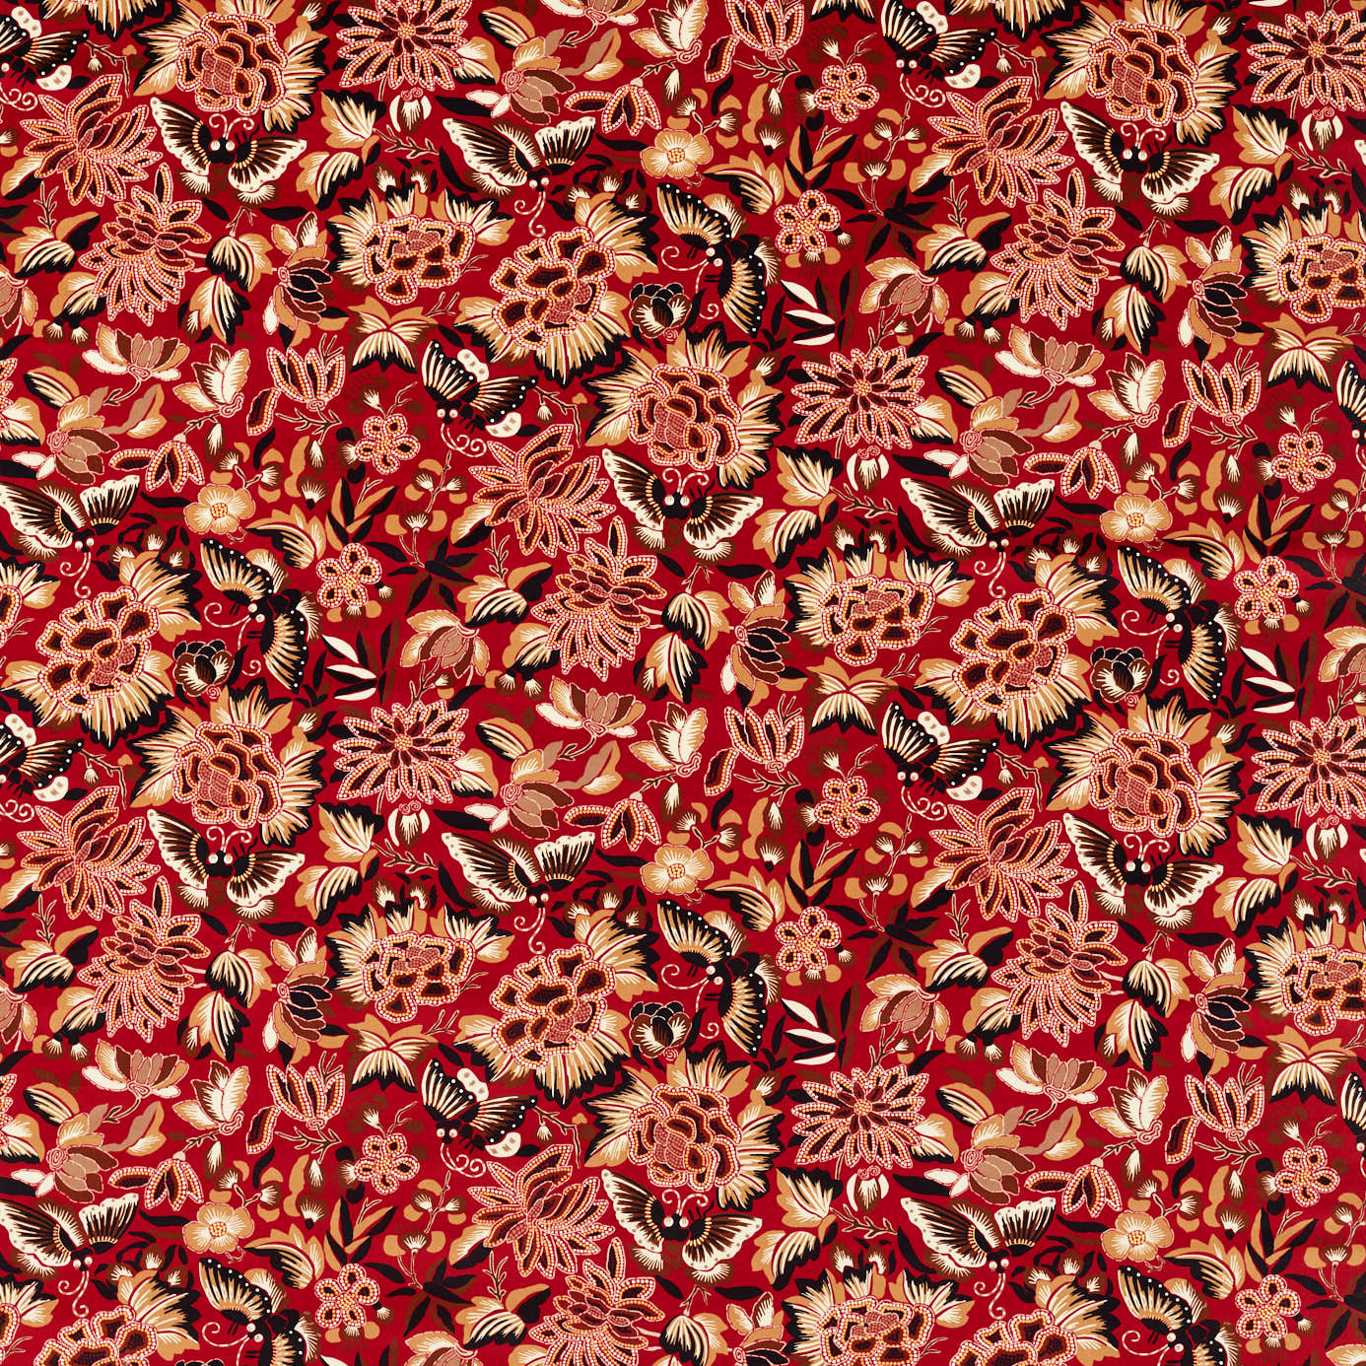 Amara Butterfly Fabric by Sanderson - DWAT226974 - Cinnabar/Ink Black